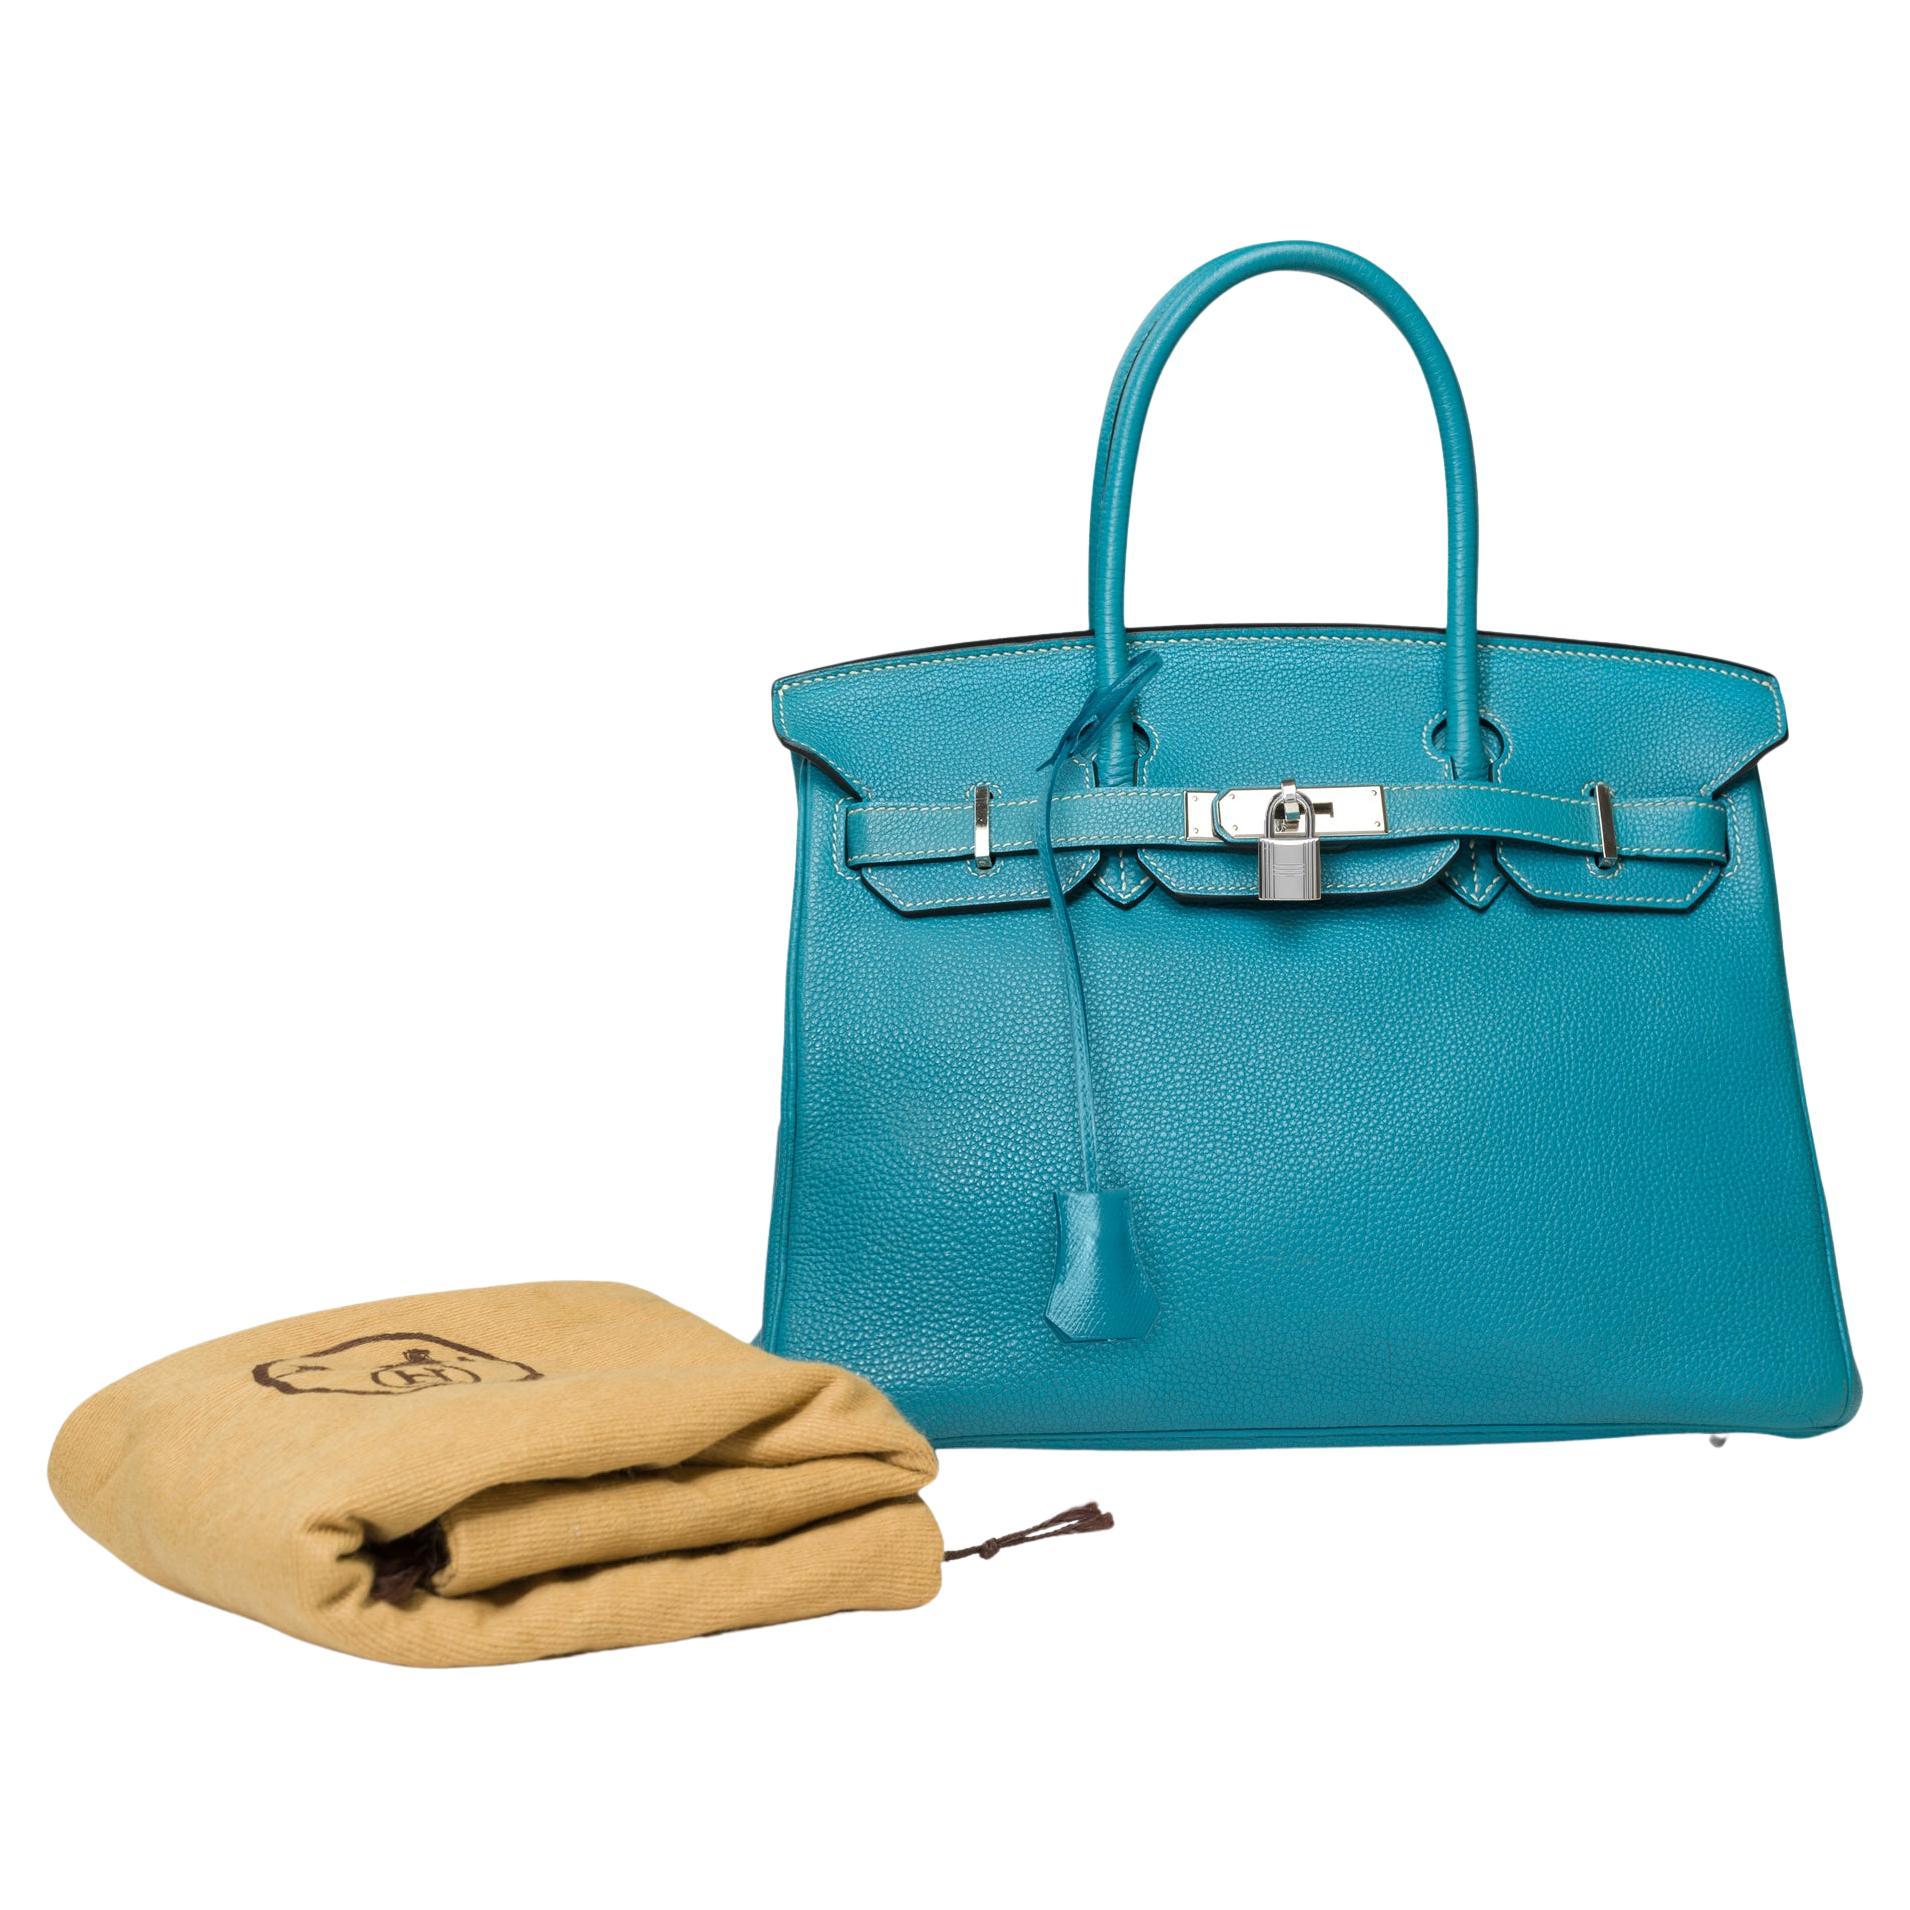 Splendid Hermes Birkin 30 handbag in Blue Jean Togo leather, SHW For Sale